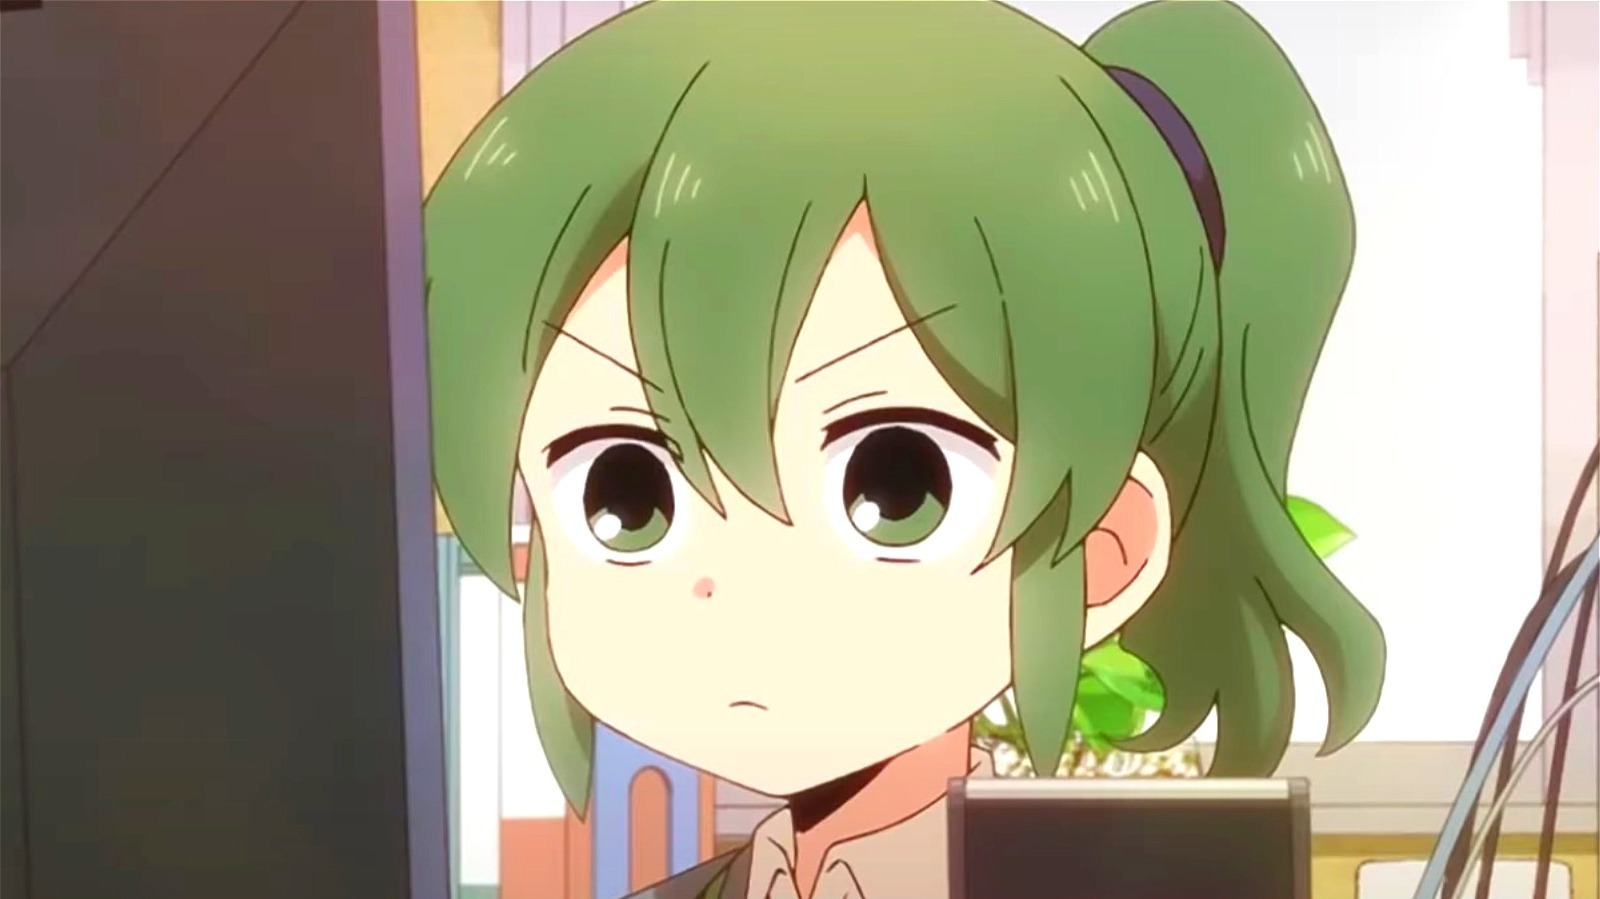 Anime Like My Senpai Is Annoying